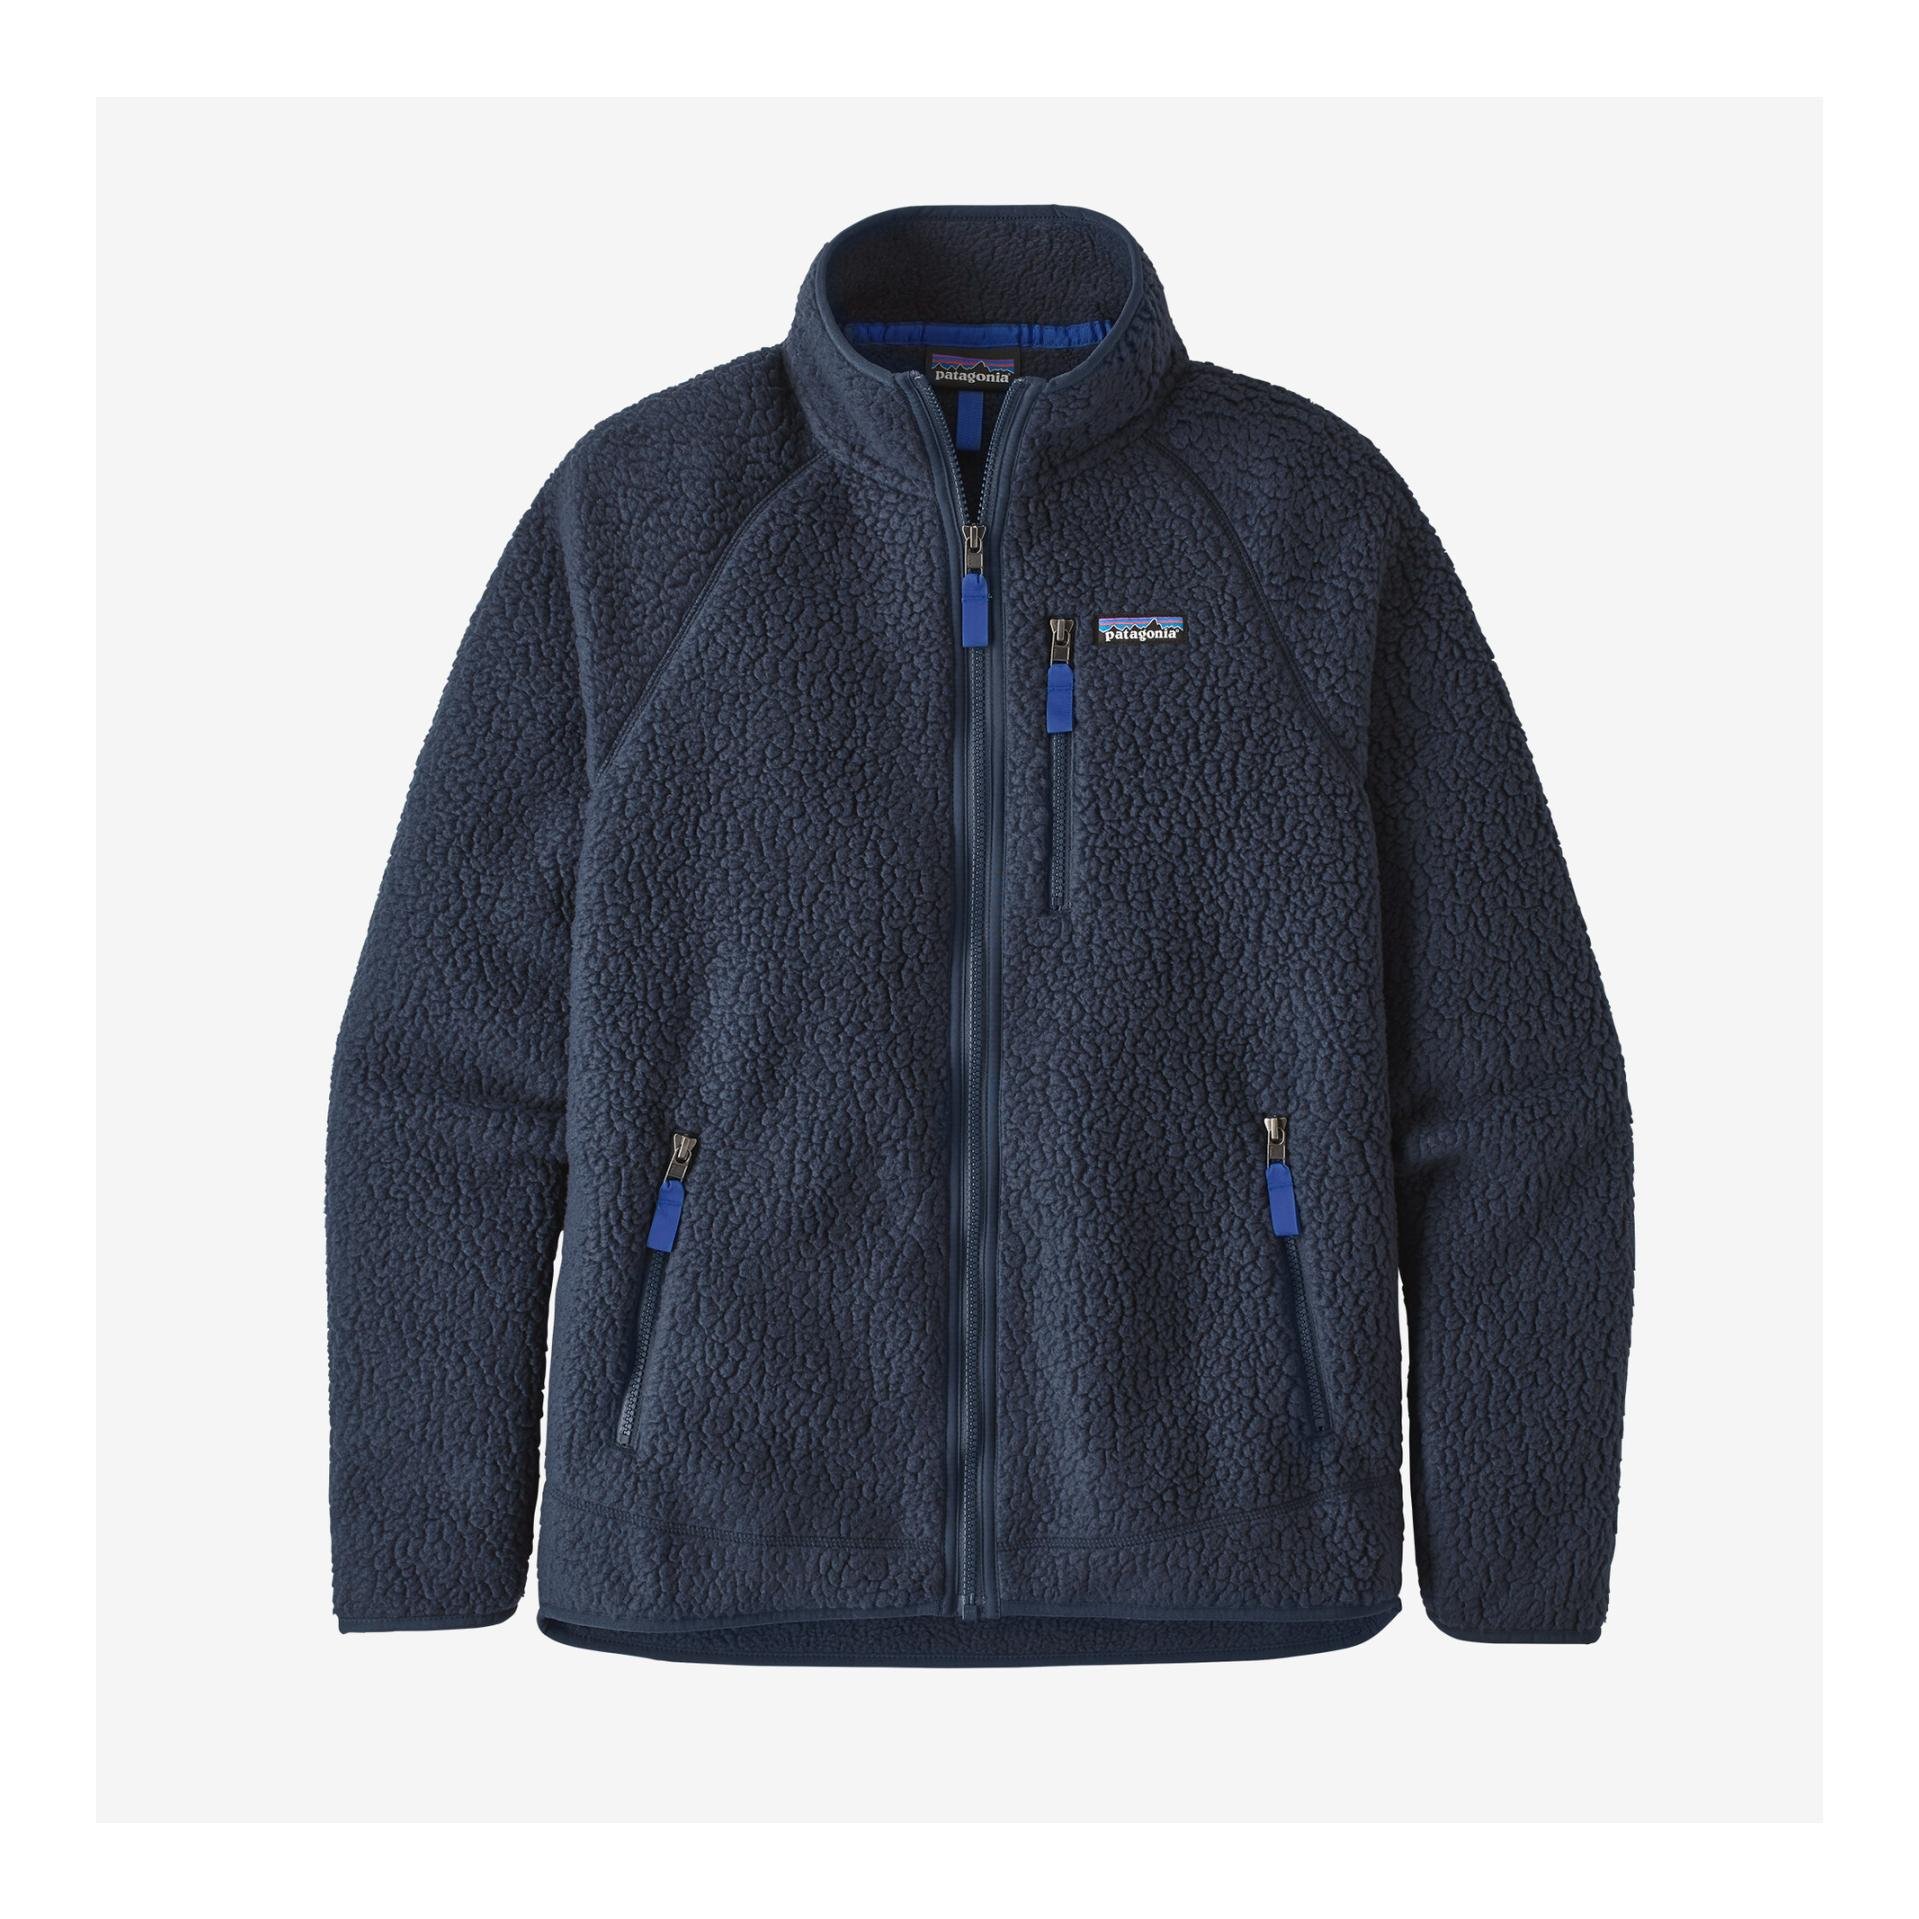 Patagonia Men’s Retro Pile Fleece Jacket